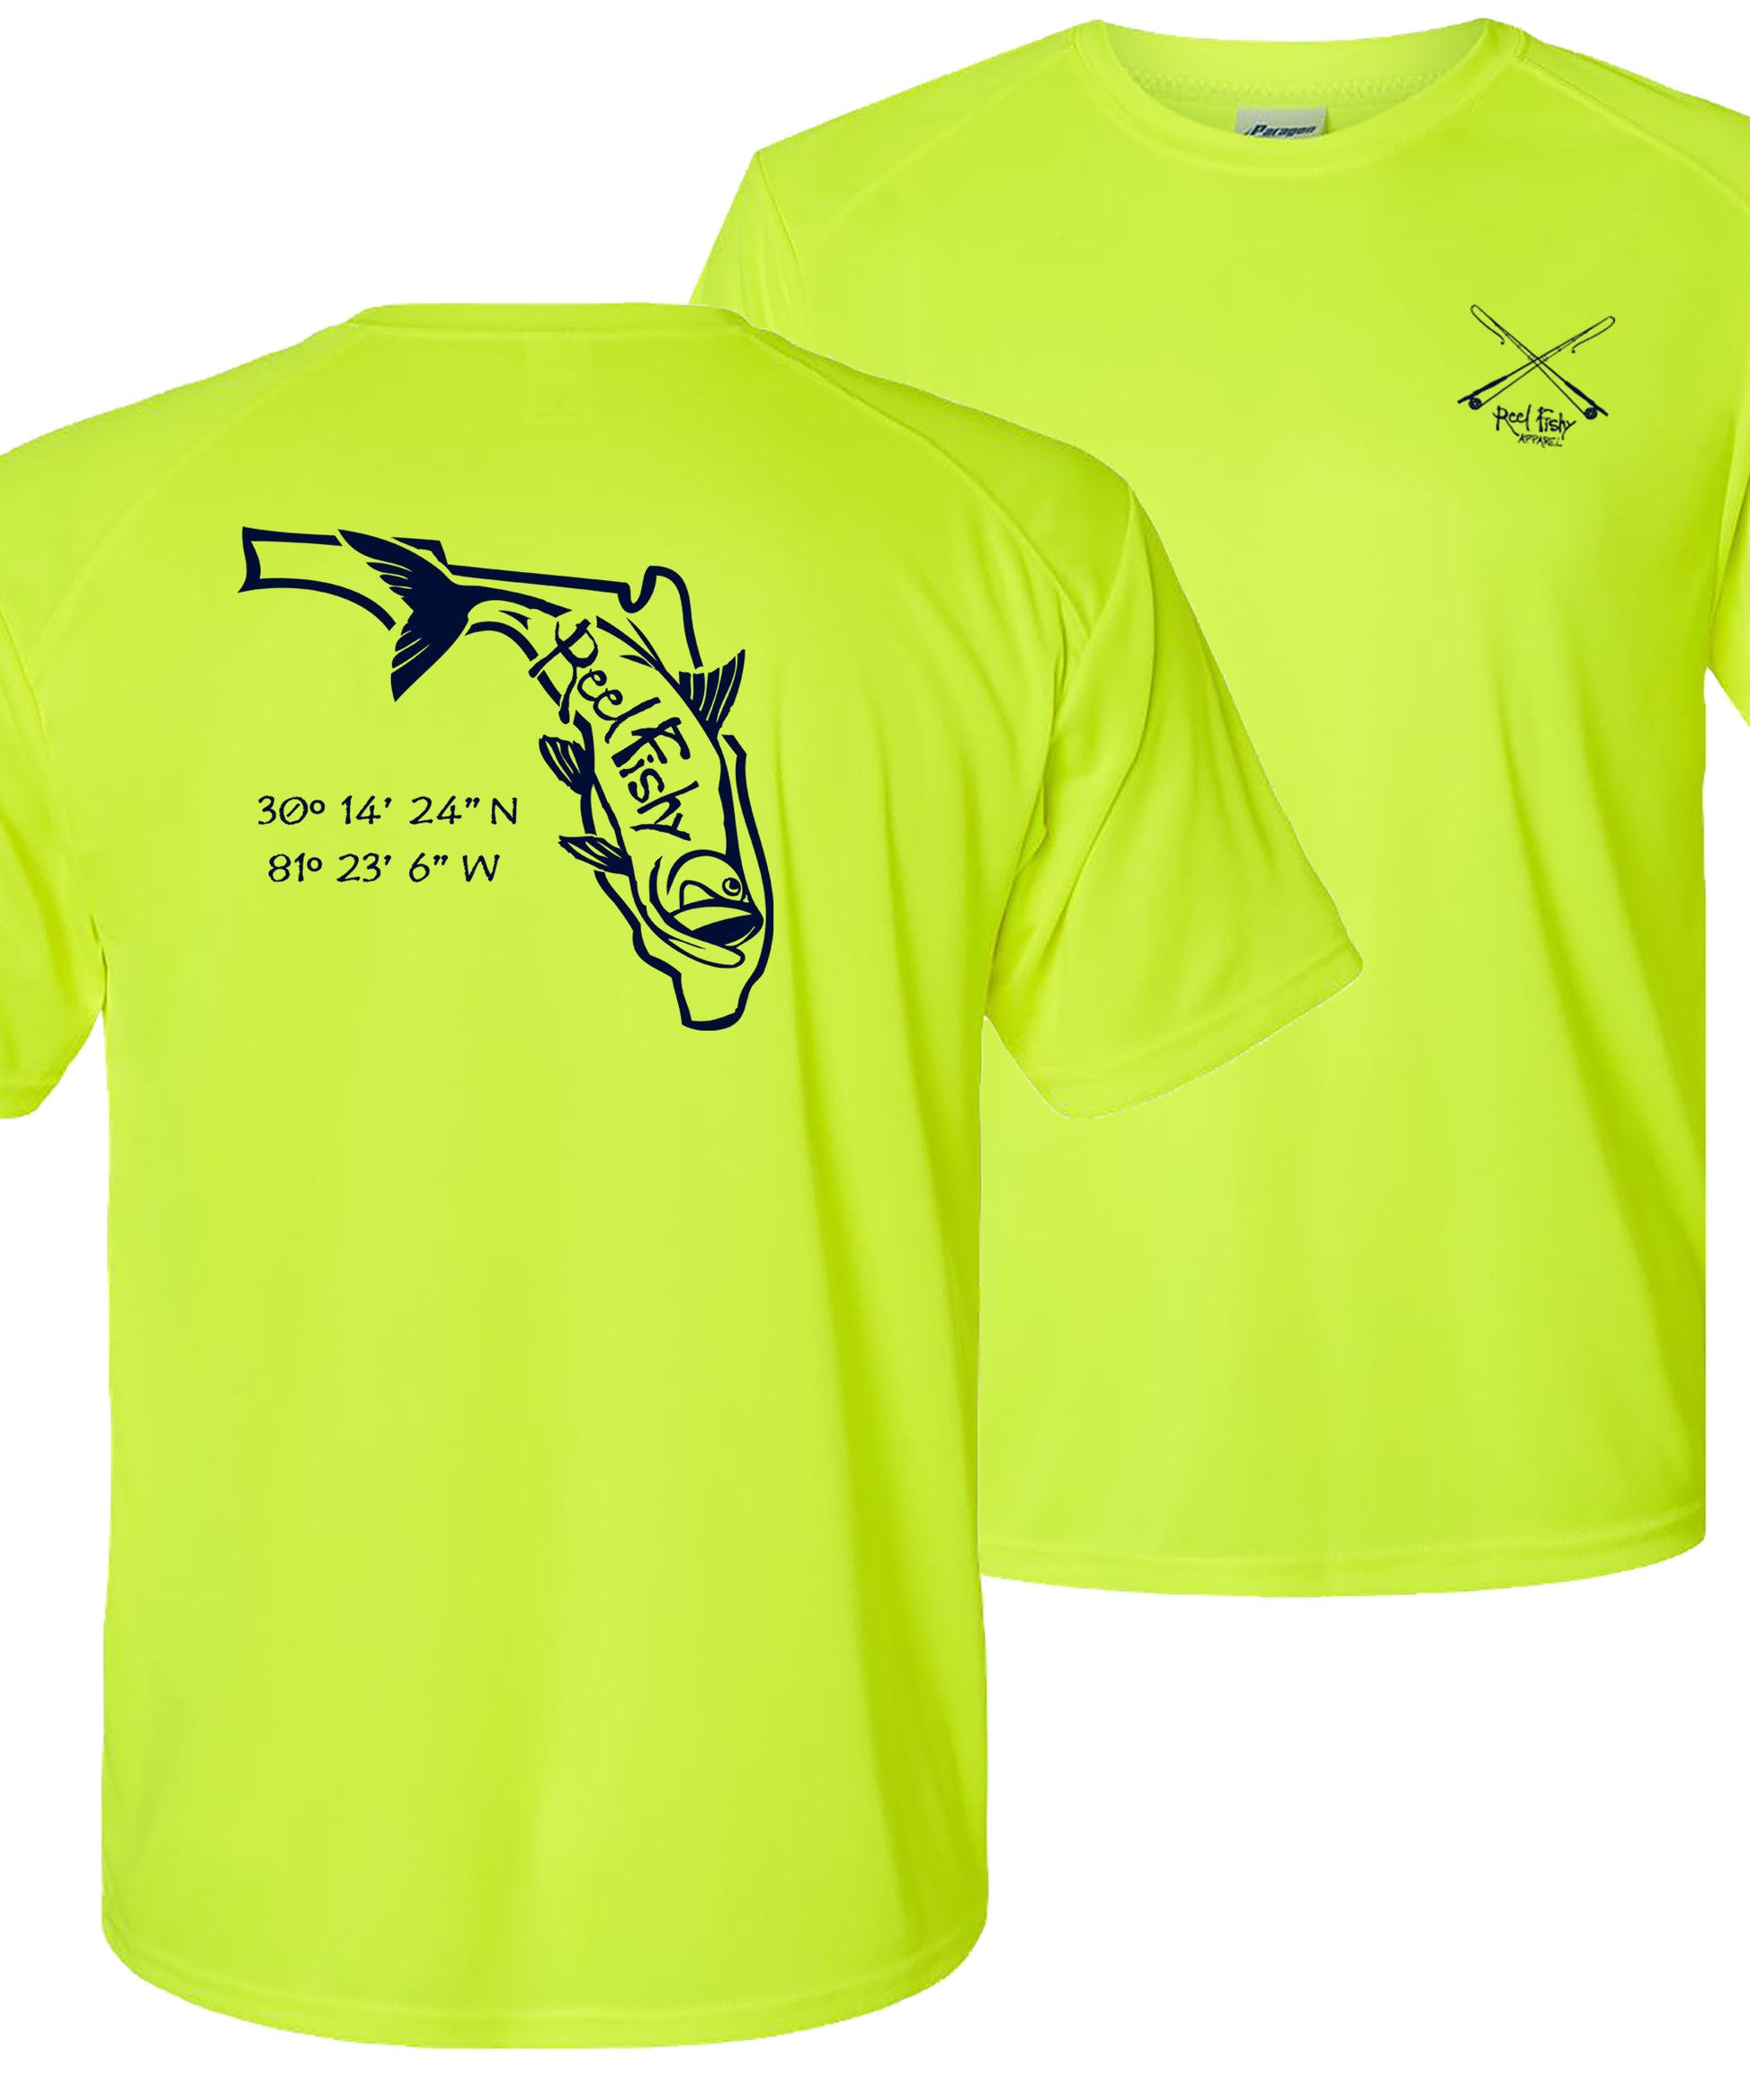 Neon Green/Navy Tarpon State of FL Performance Shirts 50+UV Sun Protection Short Sleeves